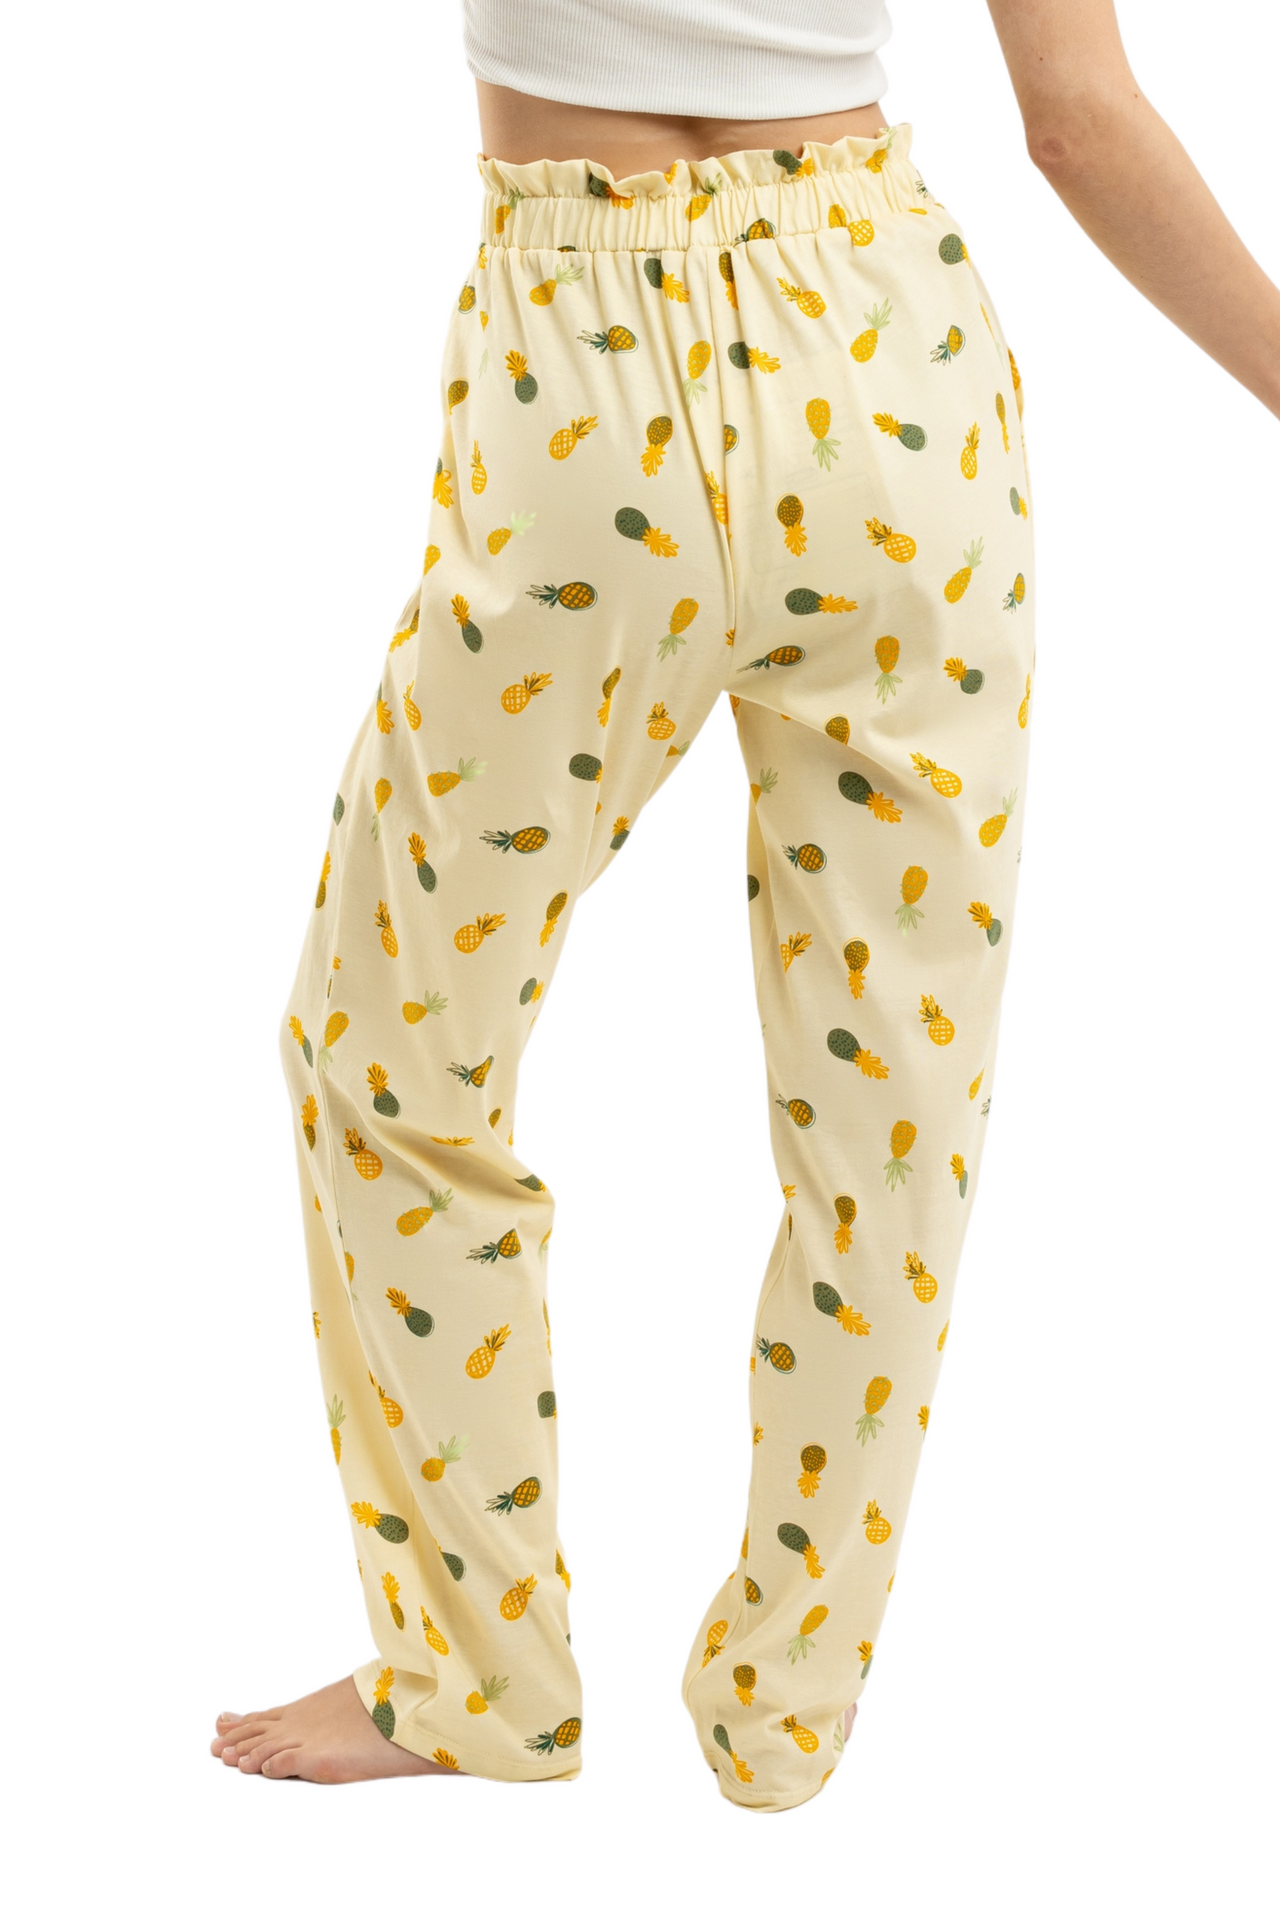 Pineapple Summer Tie Pants Yellow